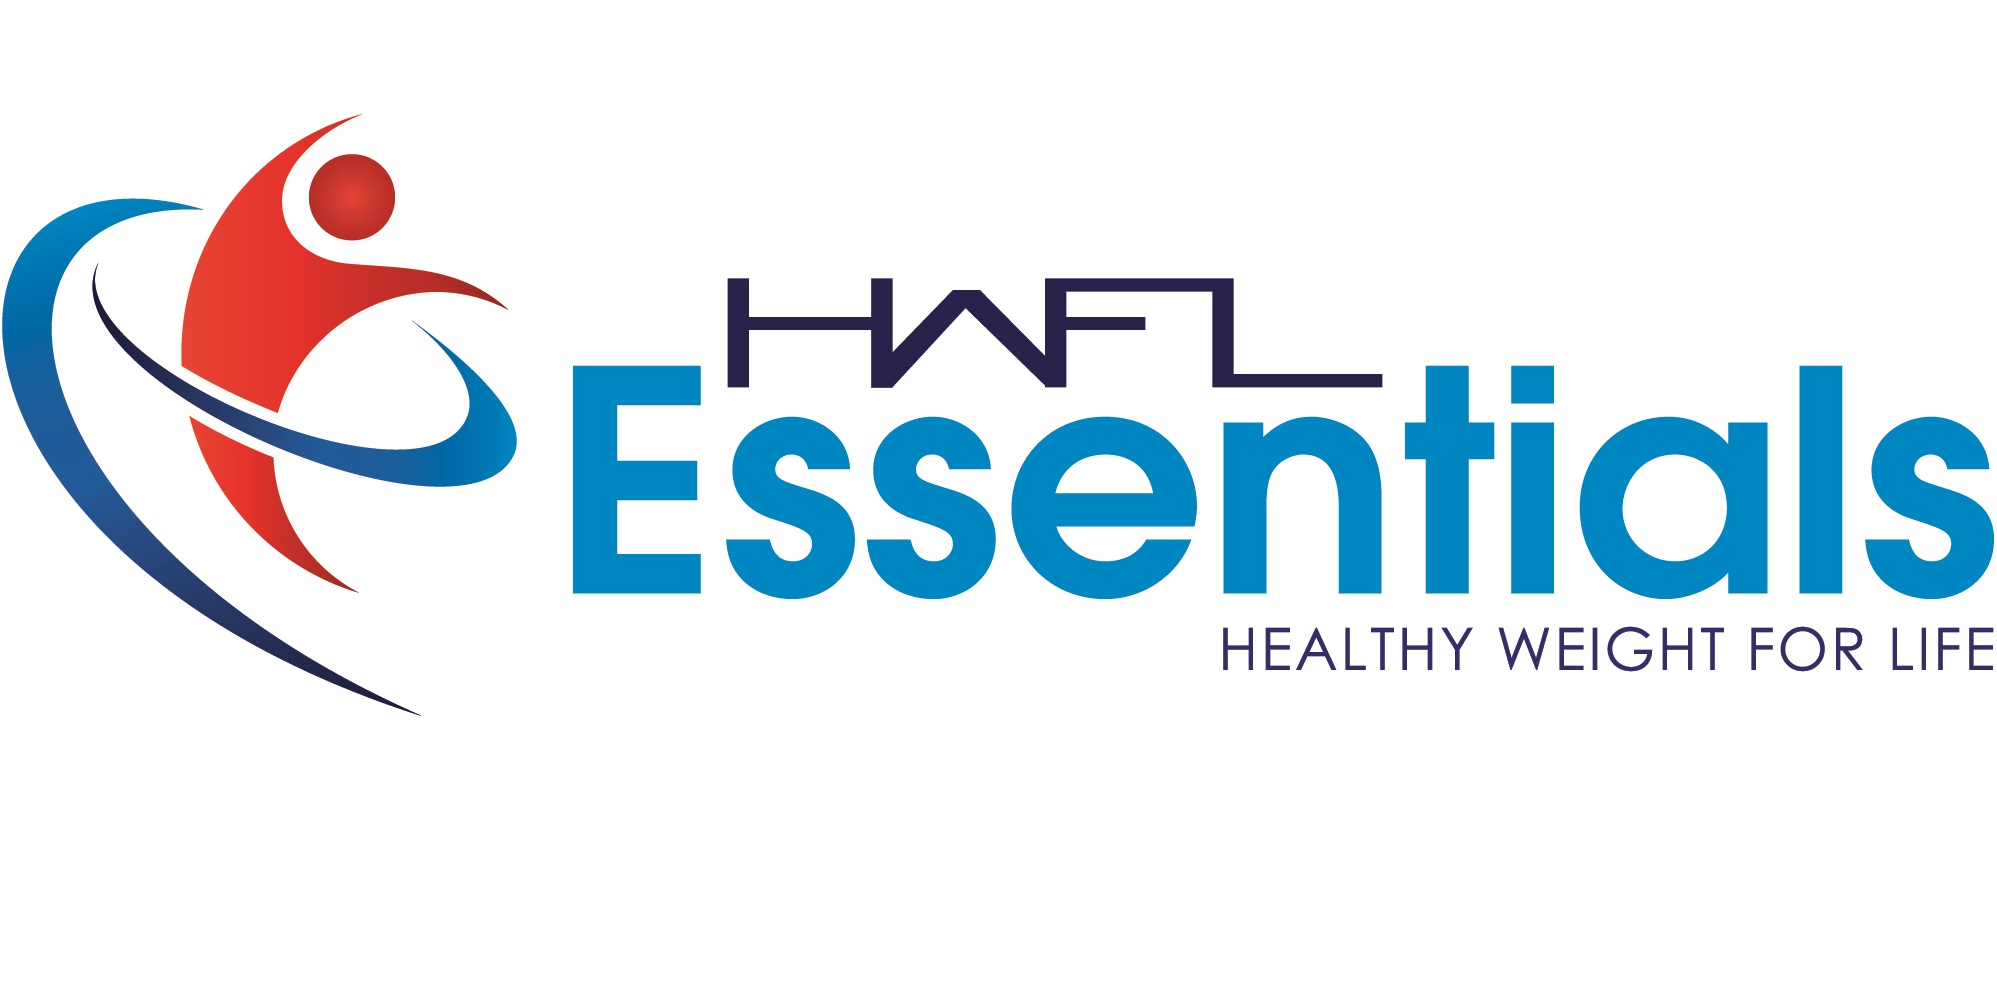 HWFL Essentials Logo CMYK